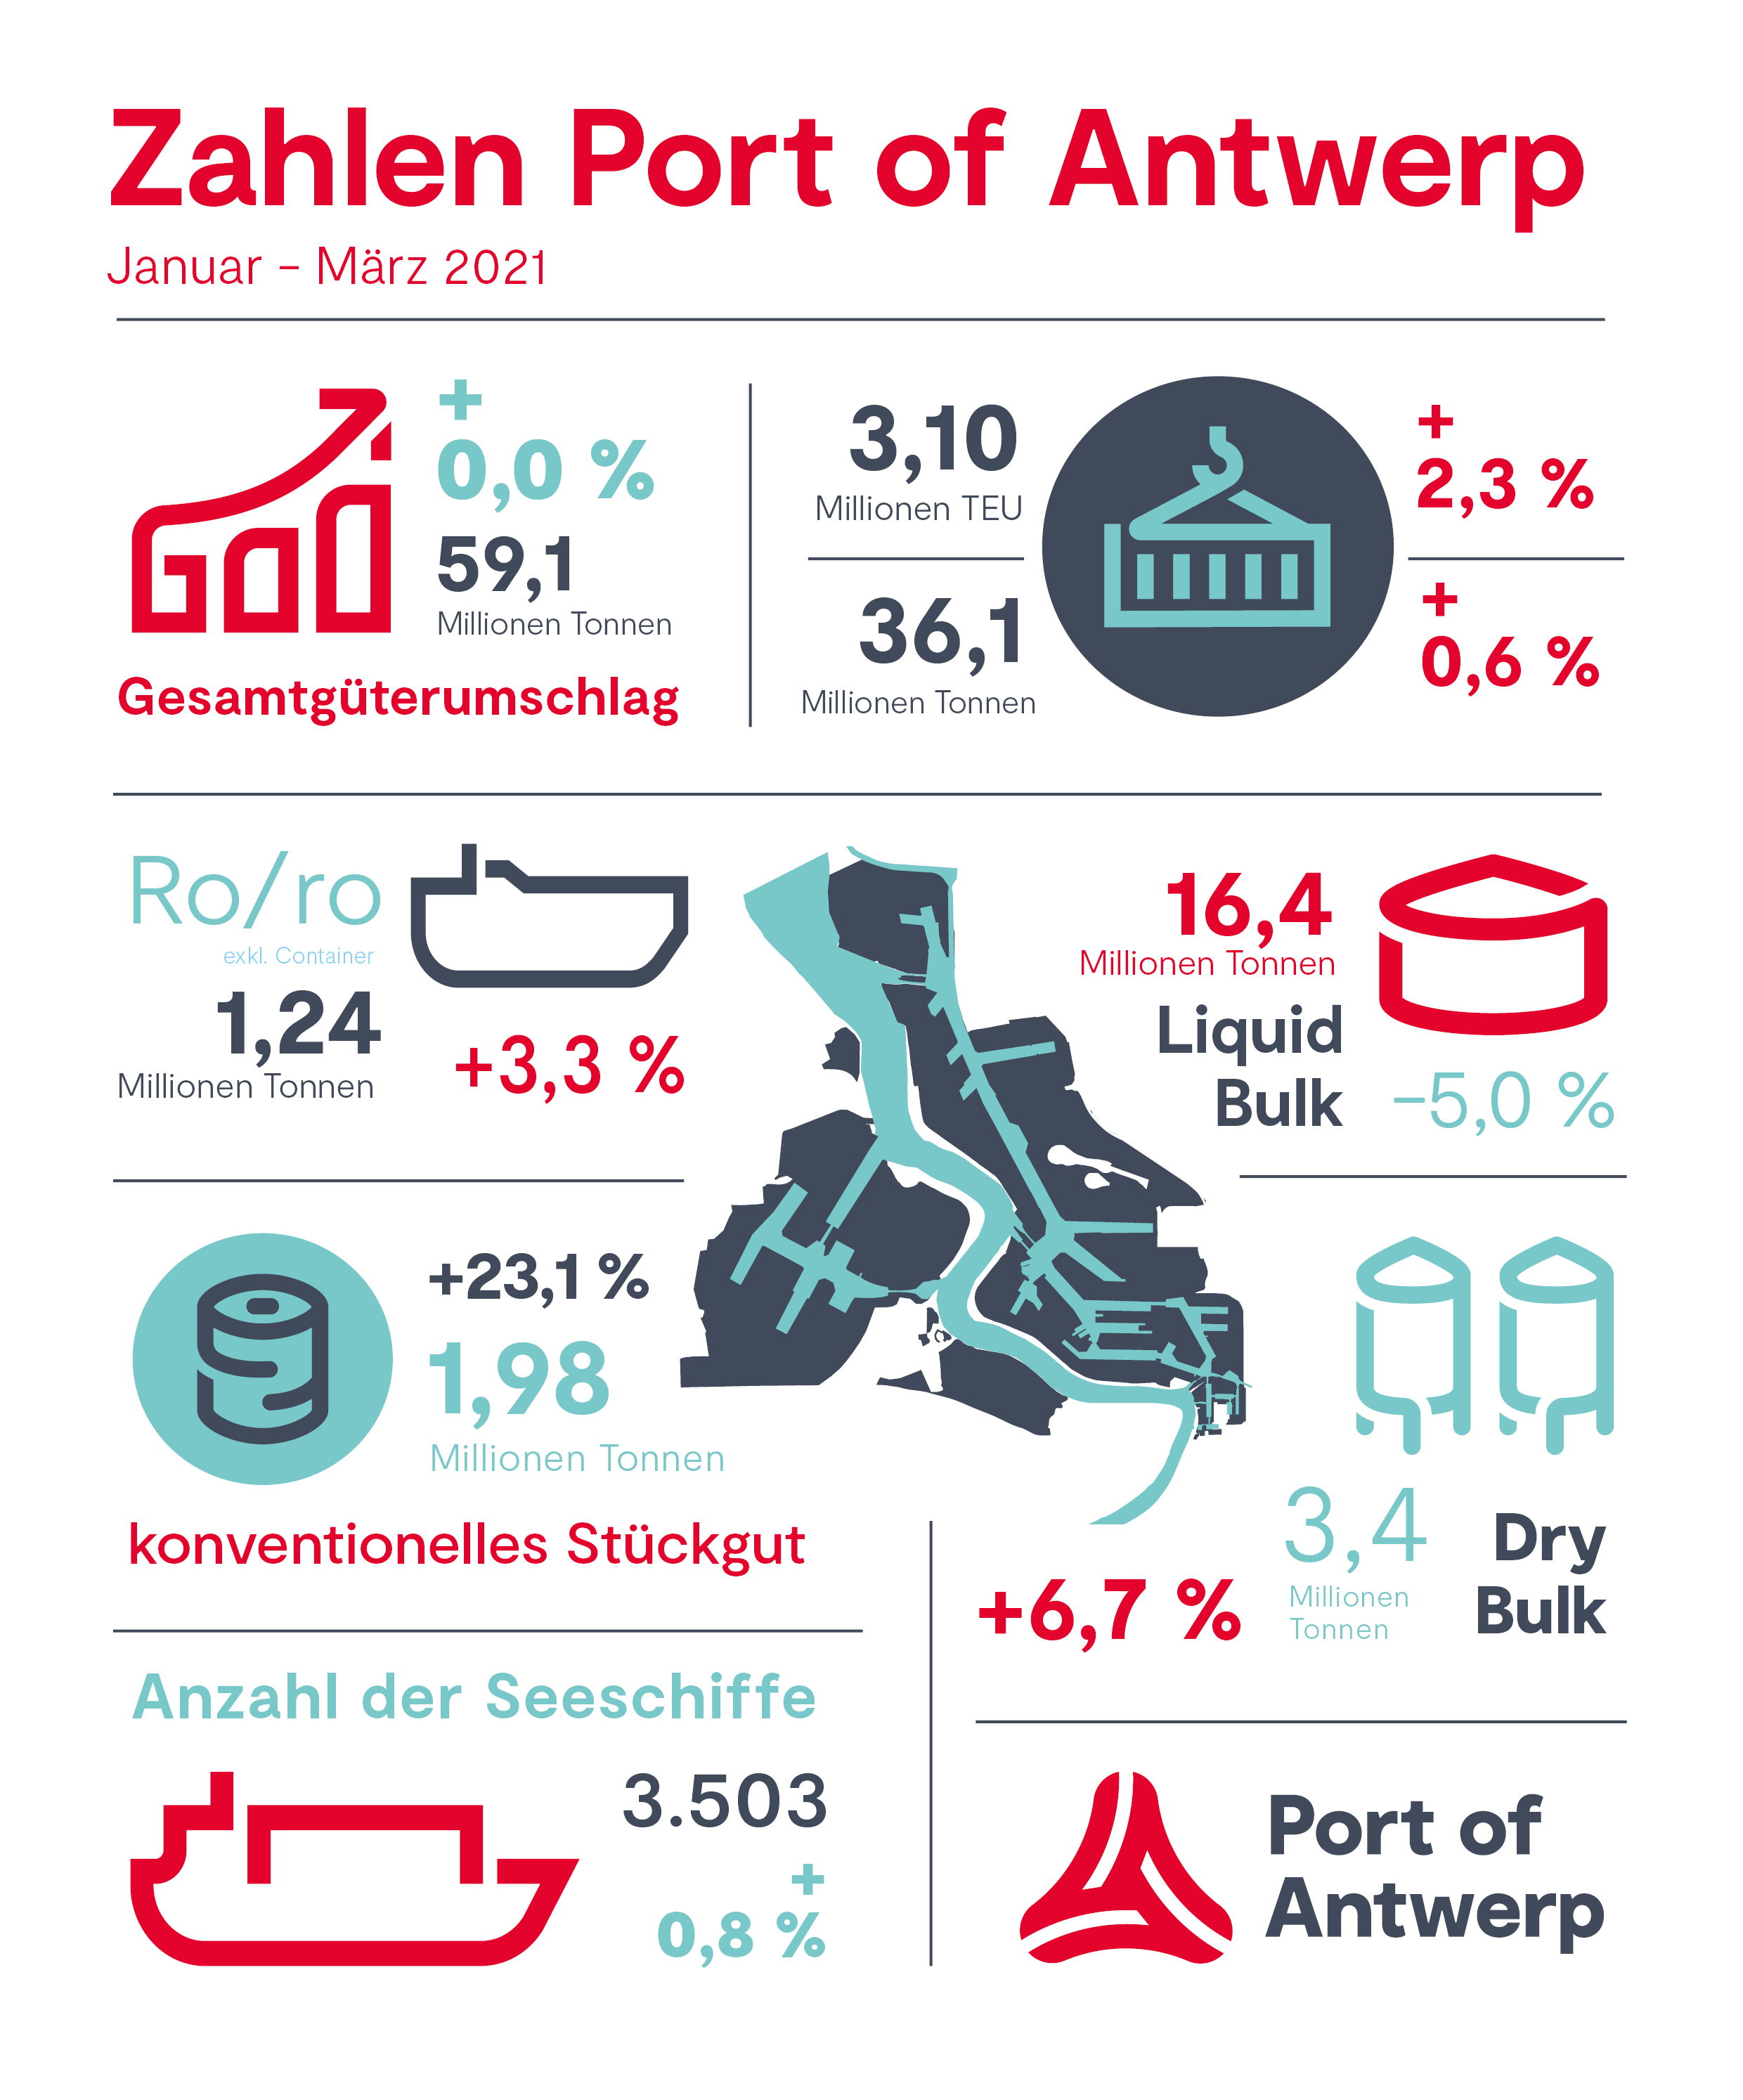 Zahlen Port of Antwerp Q1 2021